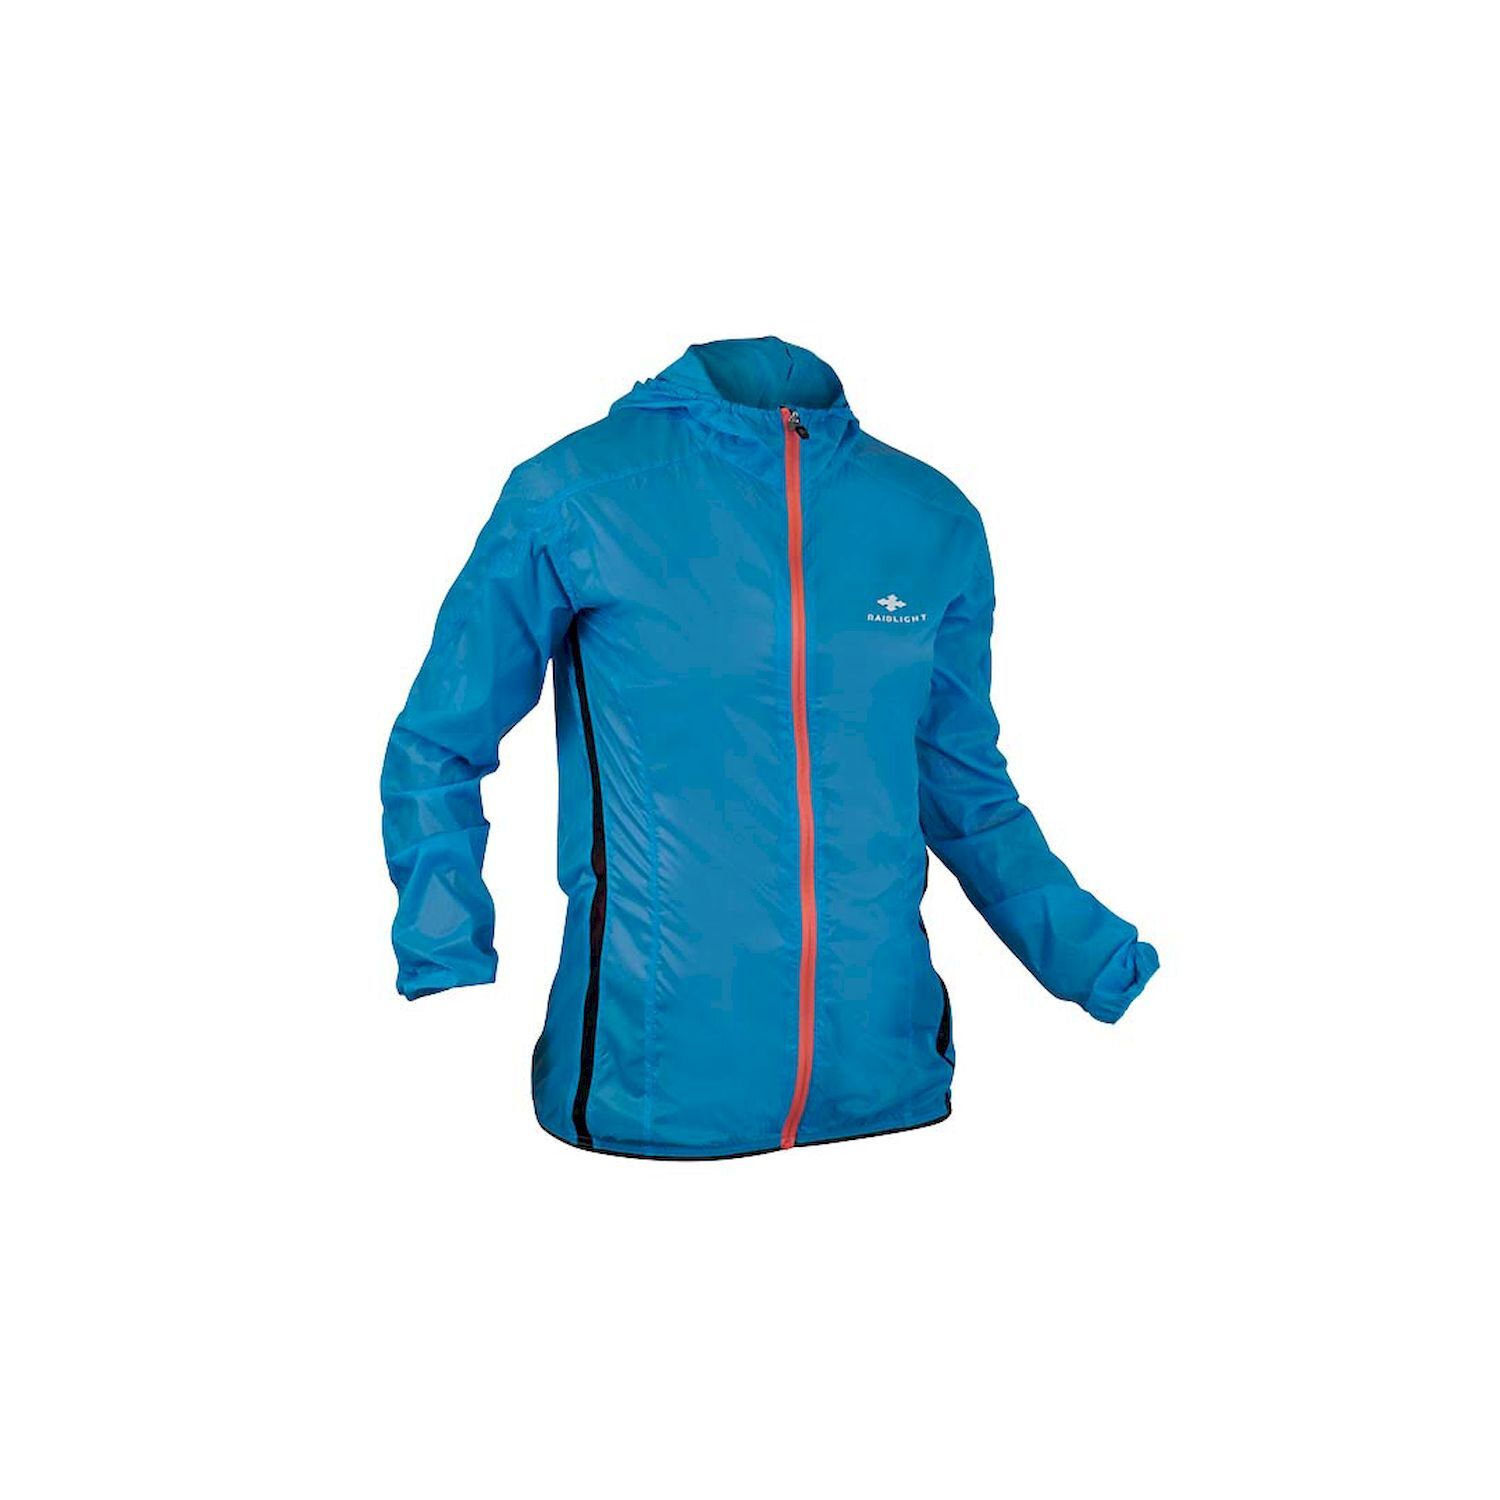 Raidlight Ultralight Windproof Jacket - Windproof jacket - Women's